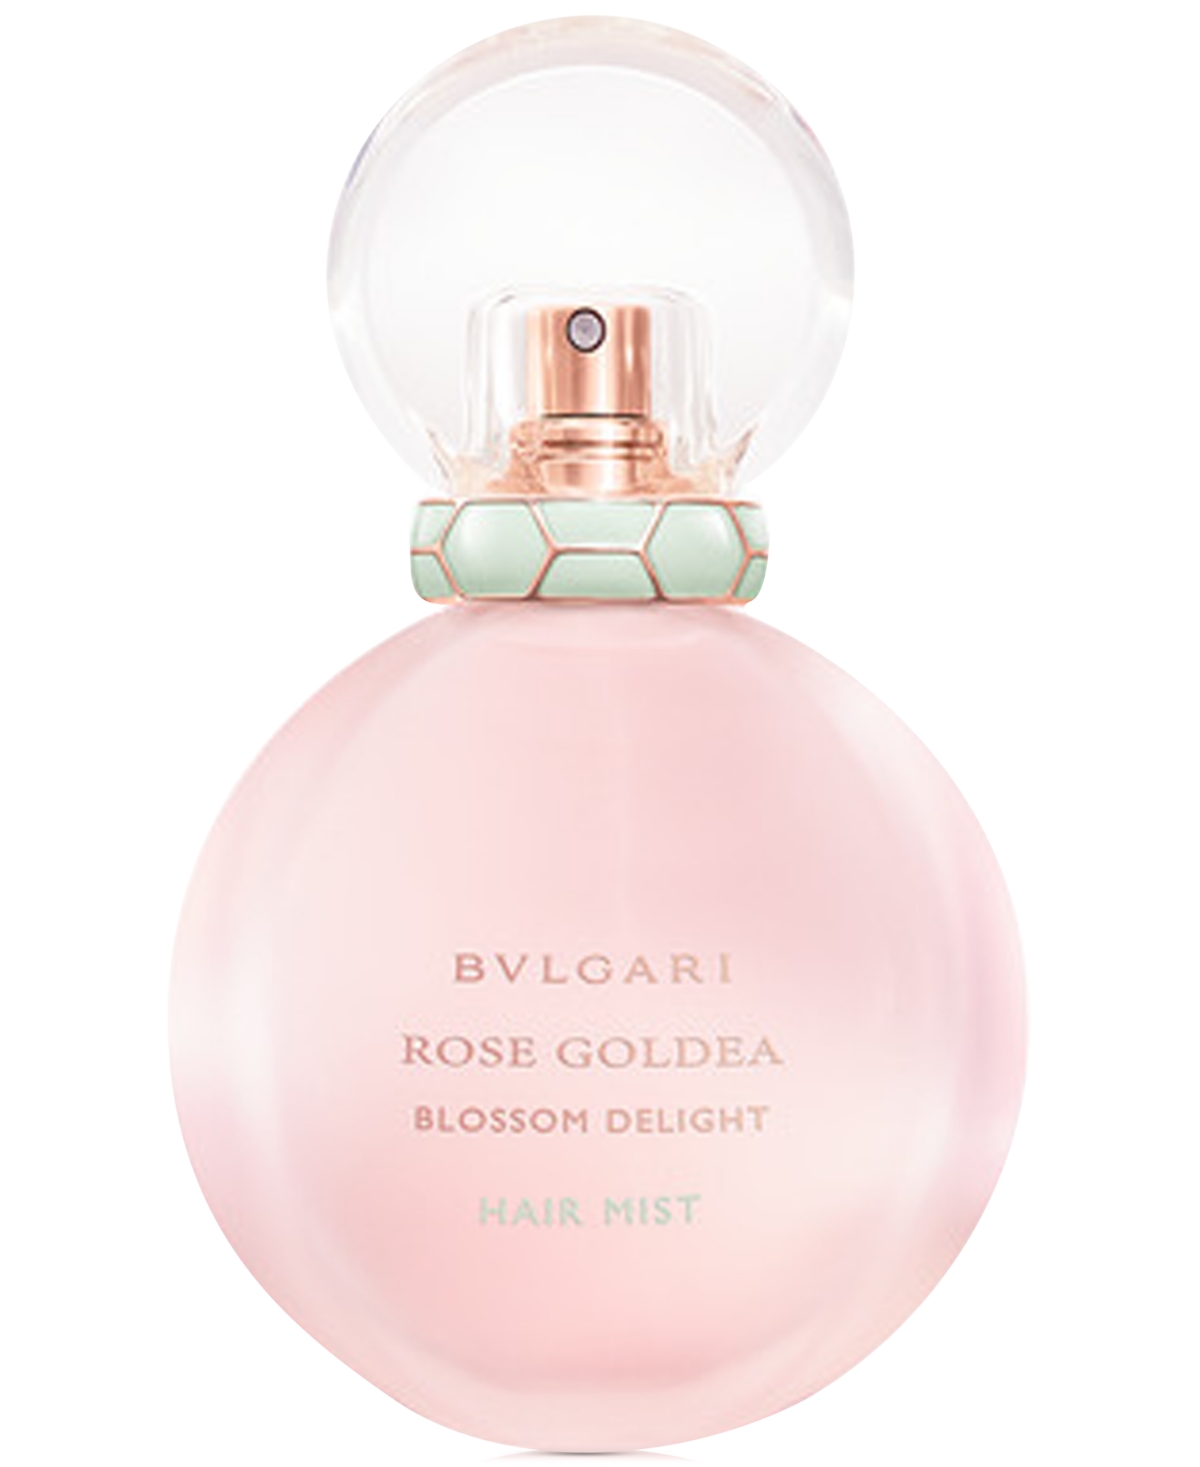 Bvlgari Rose Goldea Blossom Delight Hair Mist, 1 Oz., Created For Macy's